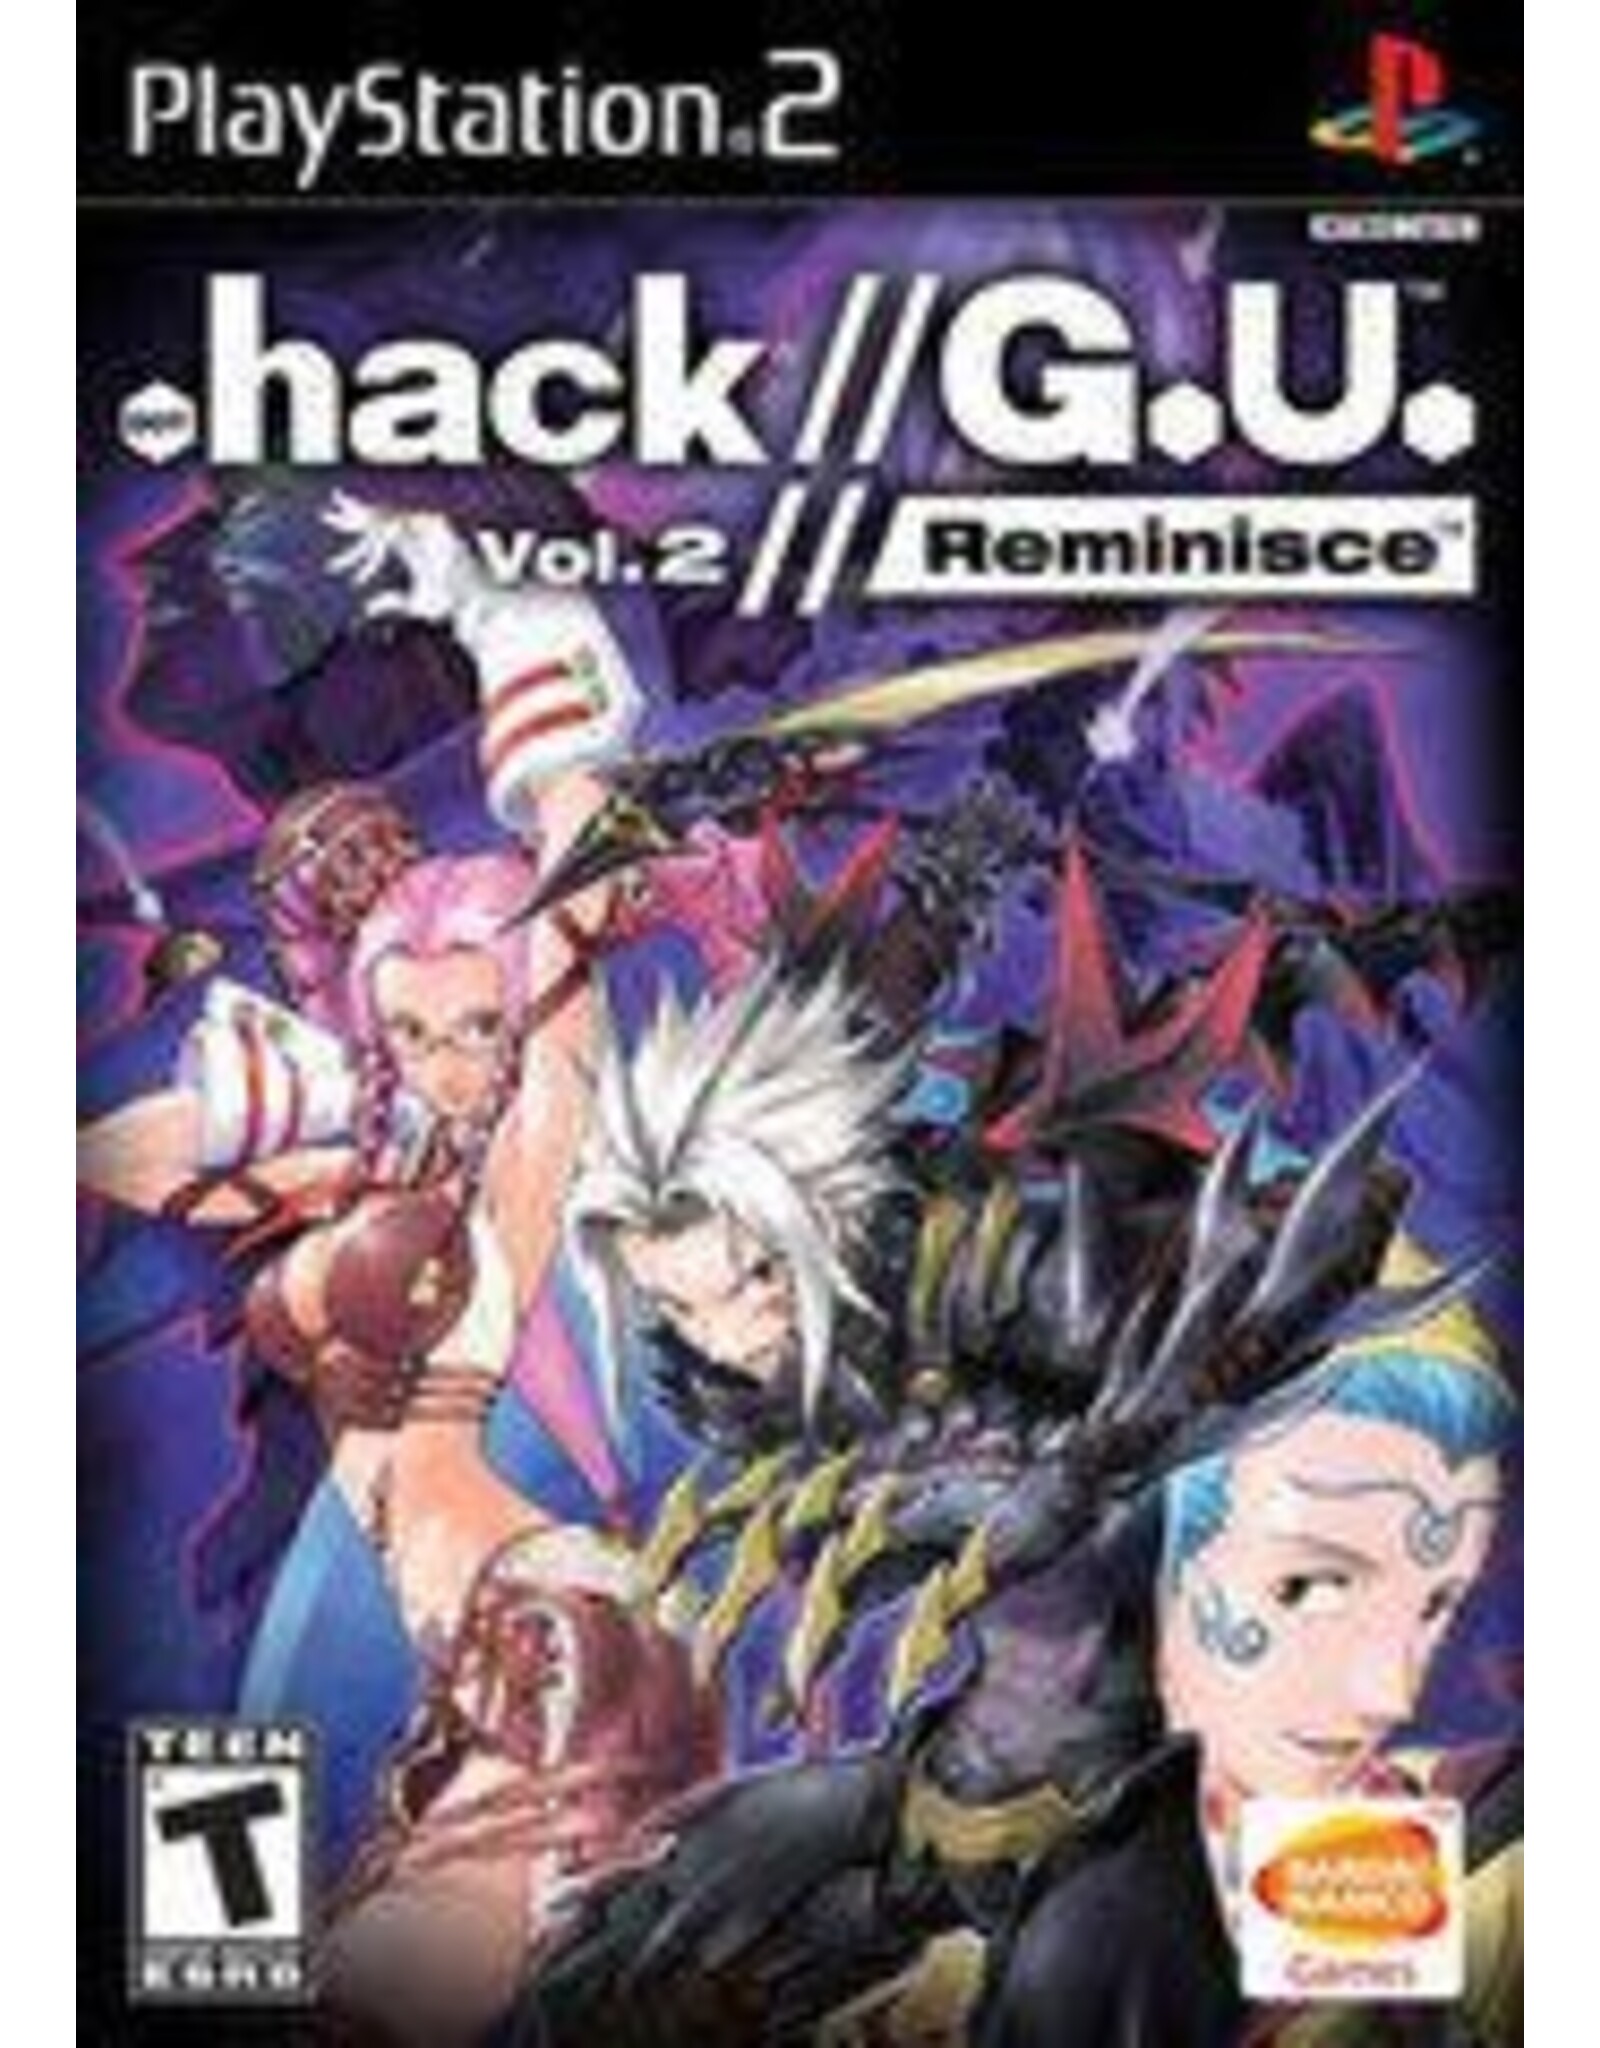 Playstation 2 .Hack G.U. Vol 2 Reminisce (Brand New, Factory Sealed)